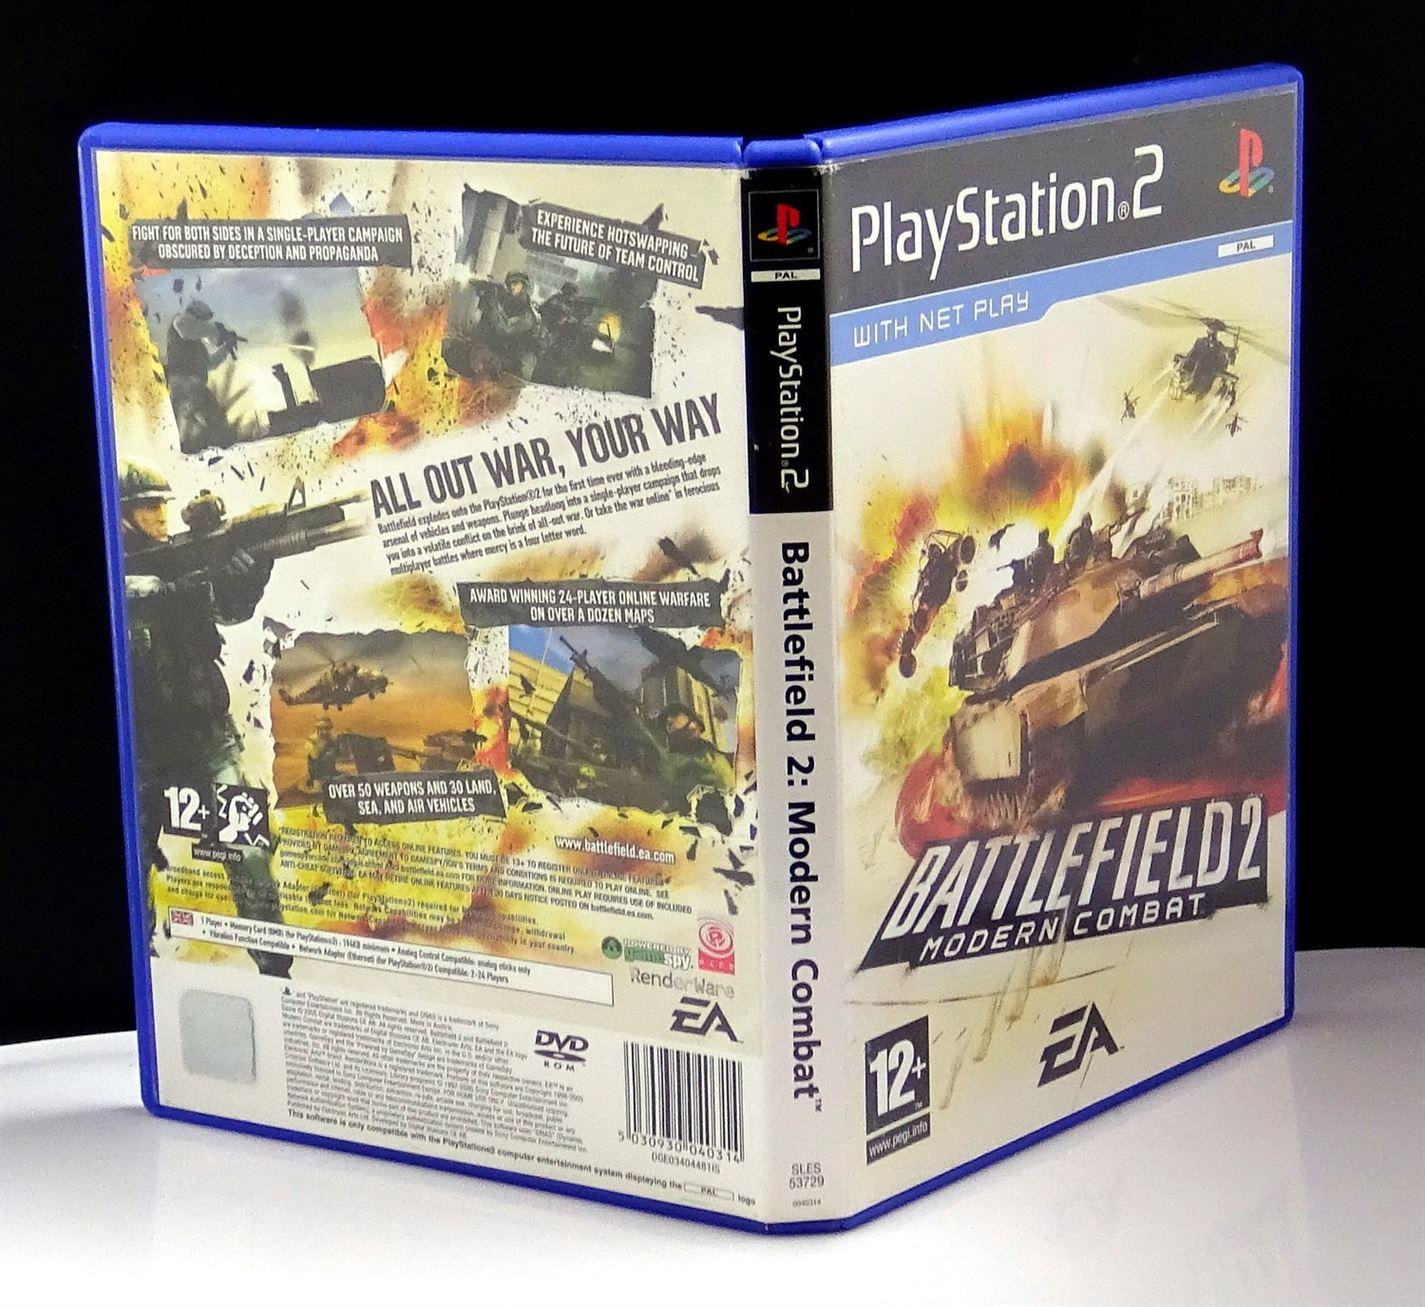 Battlefield 2 Modern Combat PS2 (Playstation 2) - UK Seller